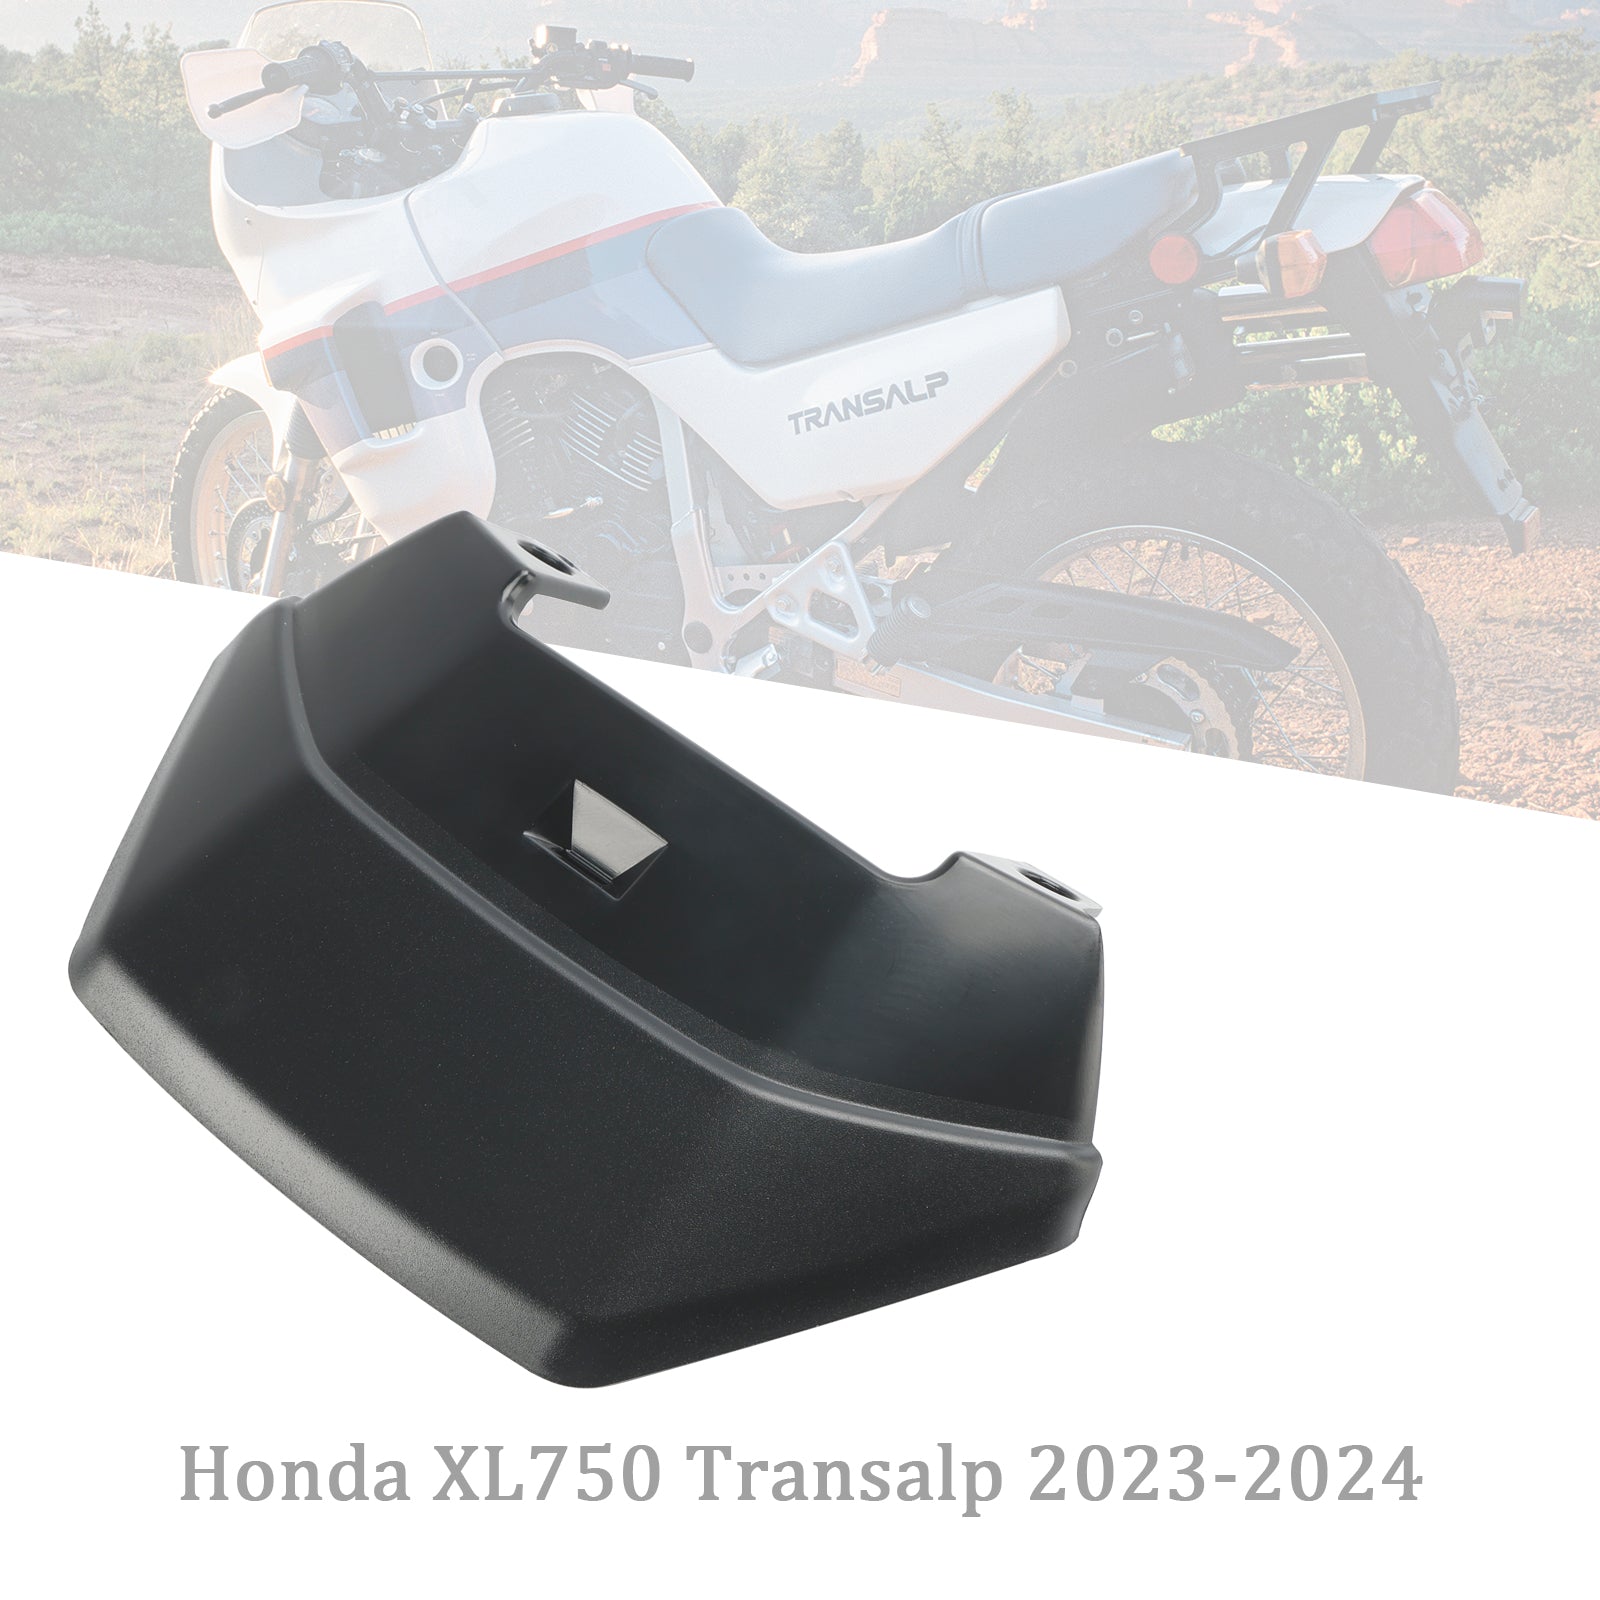 23-24 Honda XL750 Transalp Meter Frame Cover Screen Protector